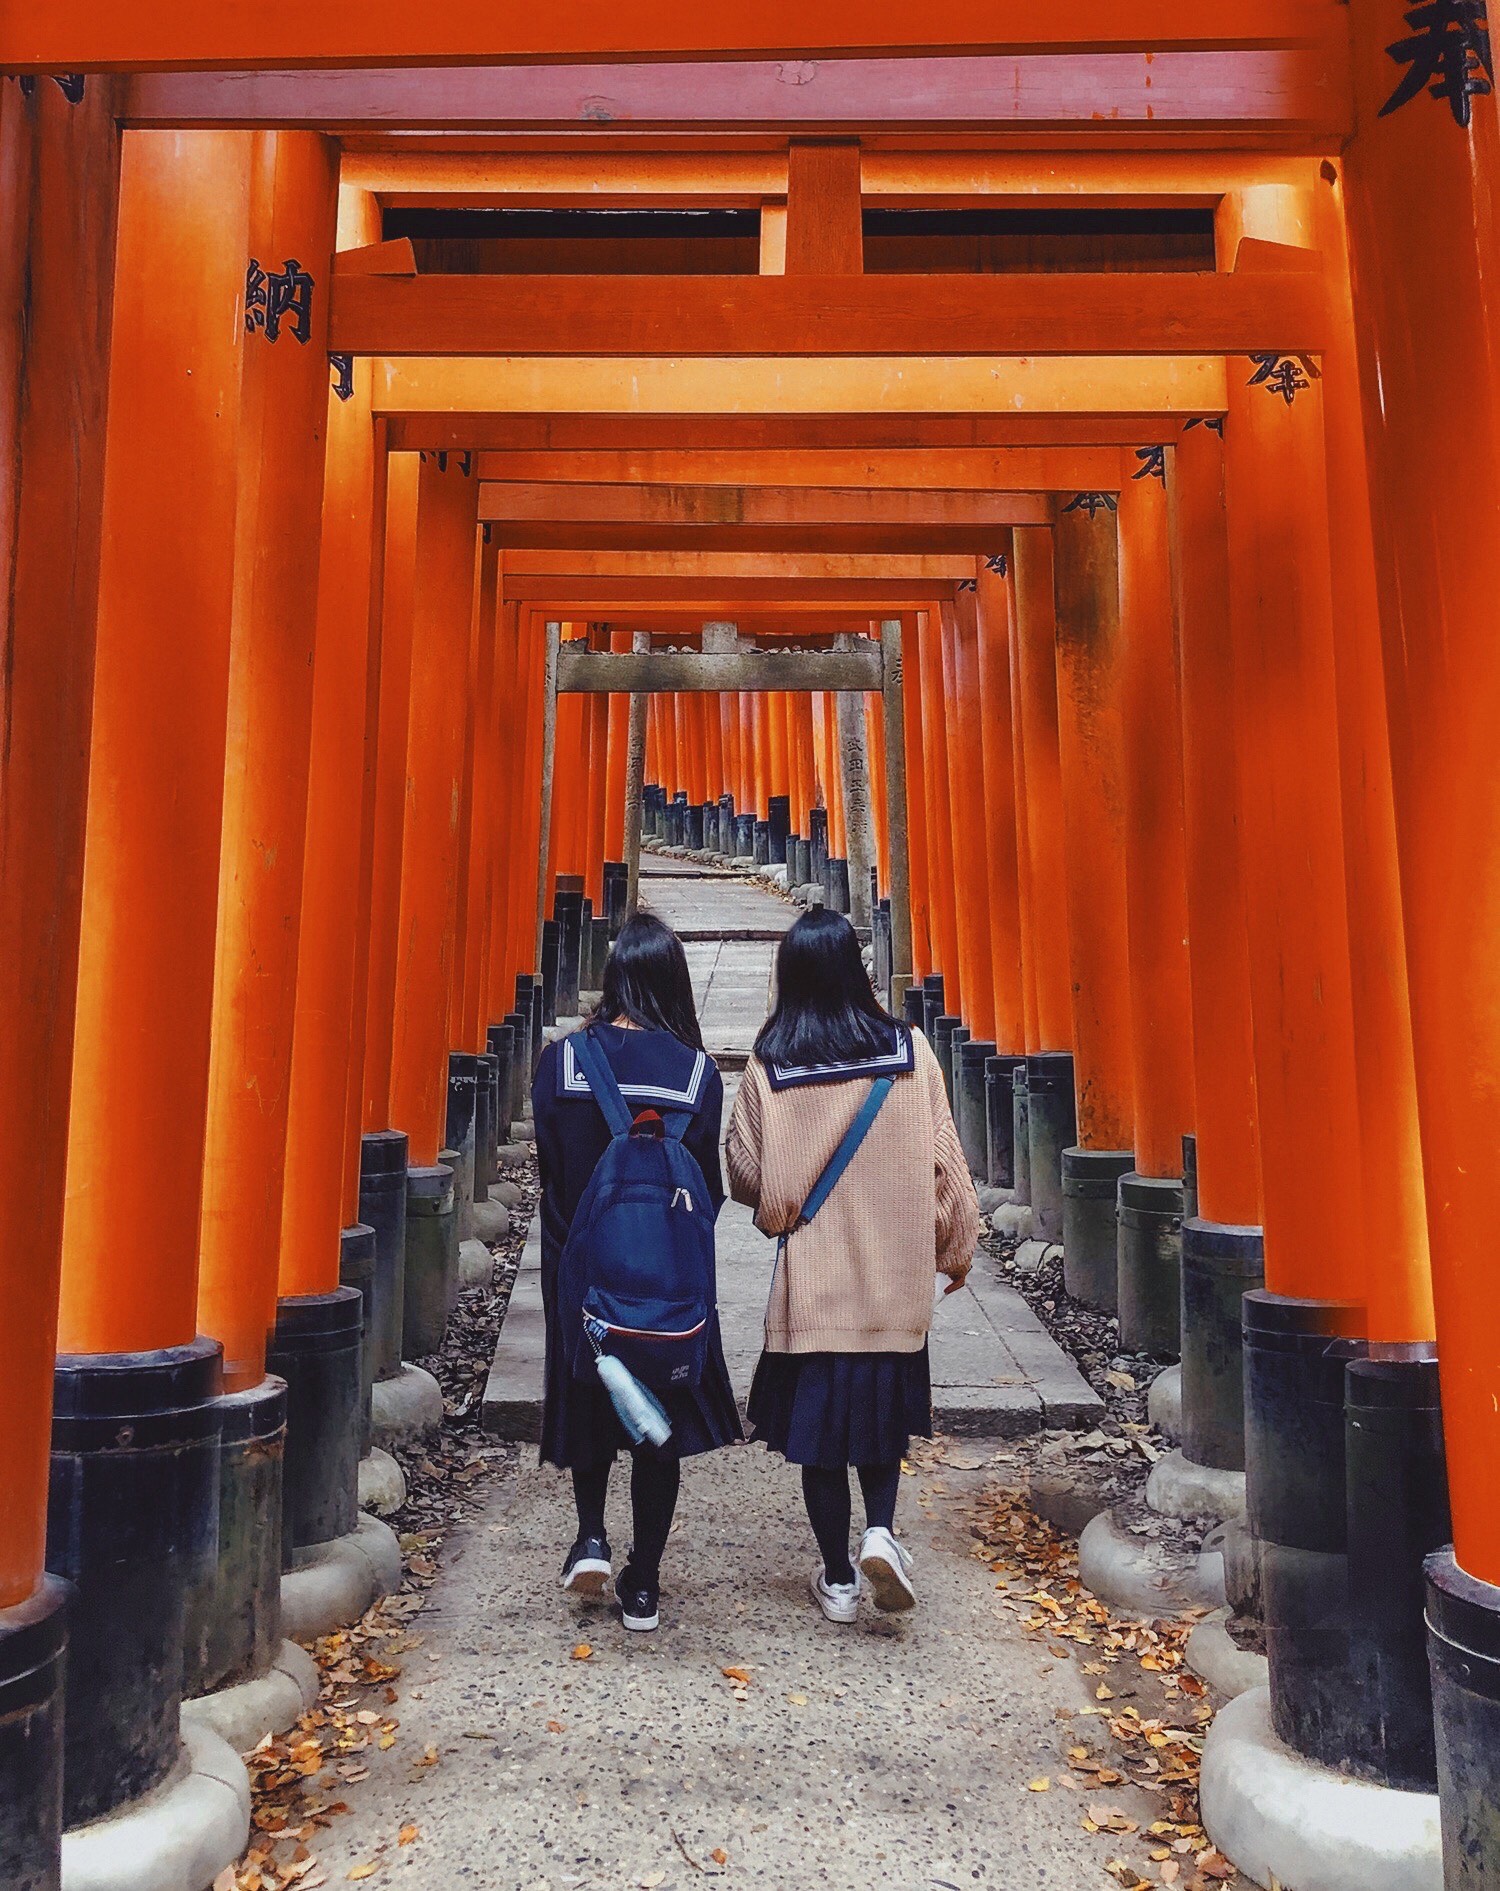 Japan Autumn 2019: Fushimi Inari Taisha Shrine